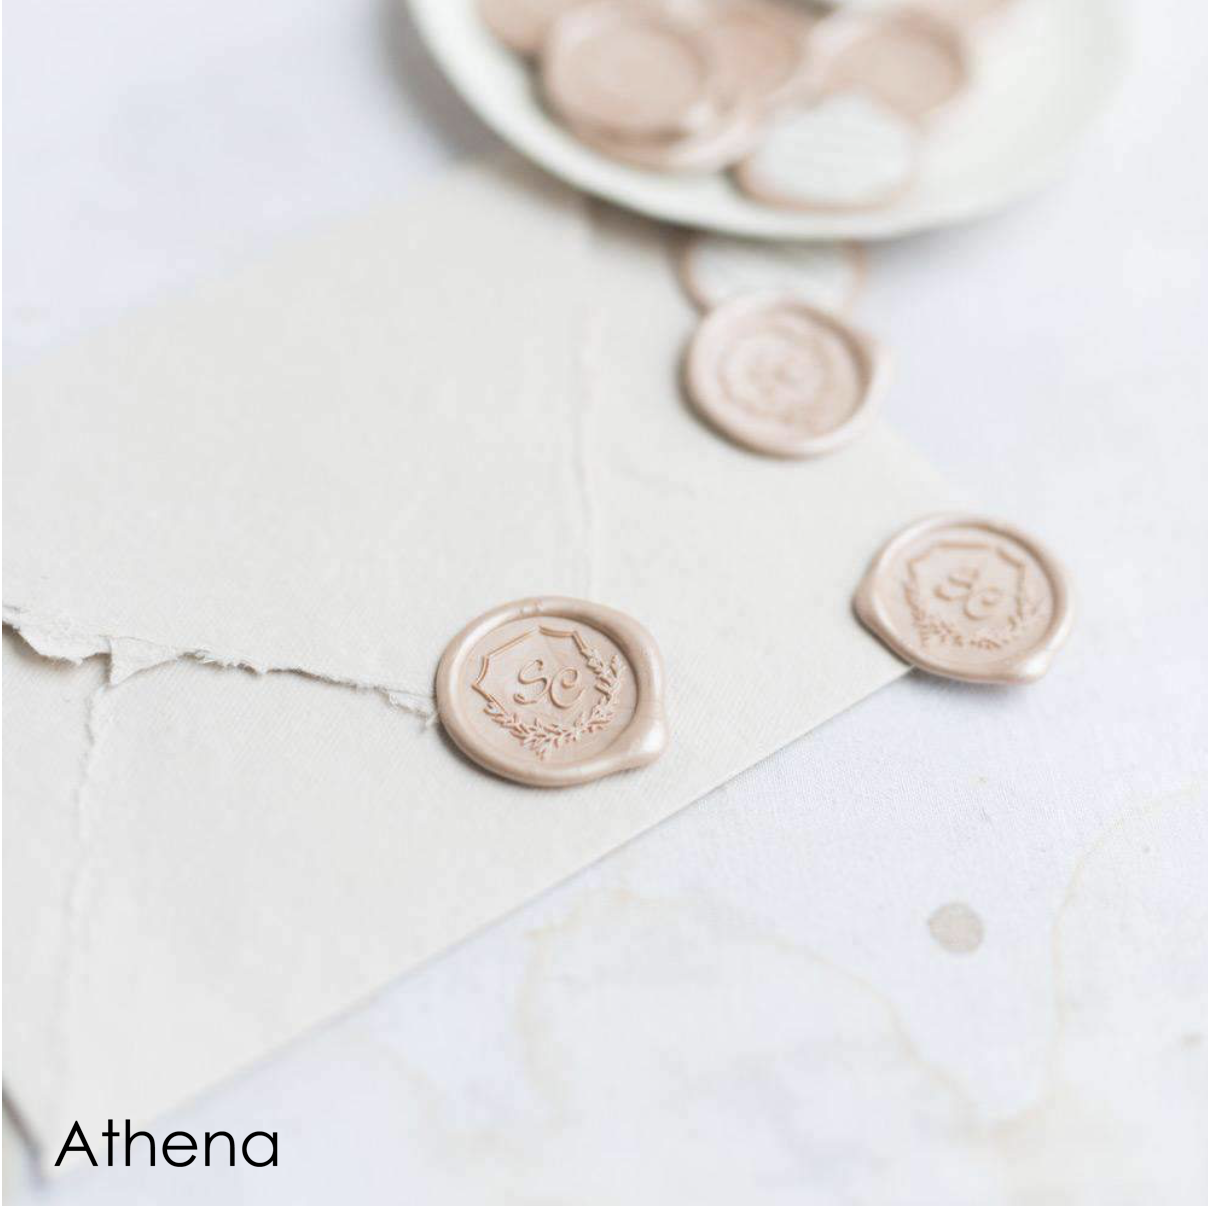 Athena Wax Stamp.png